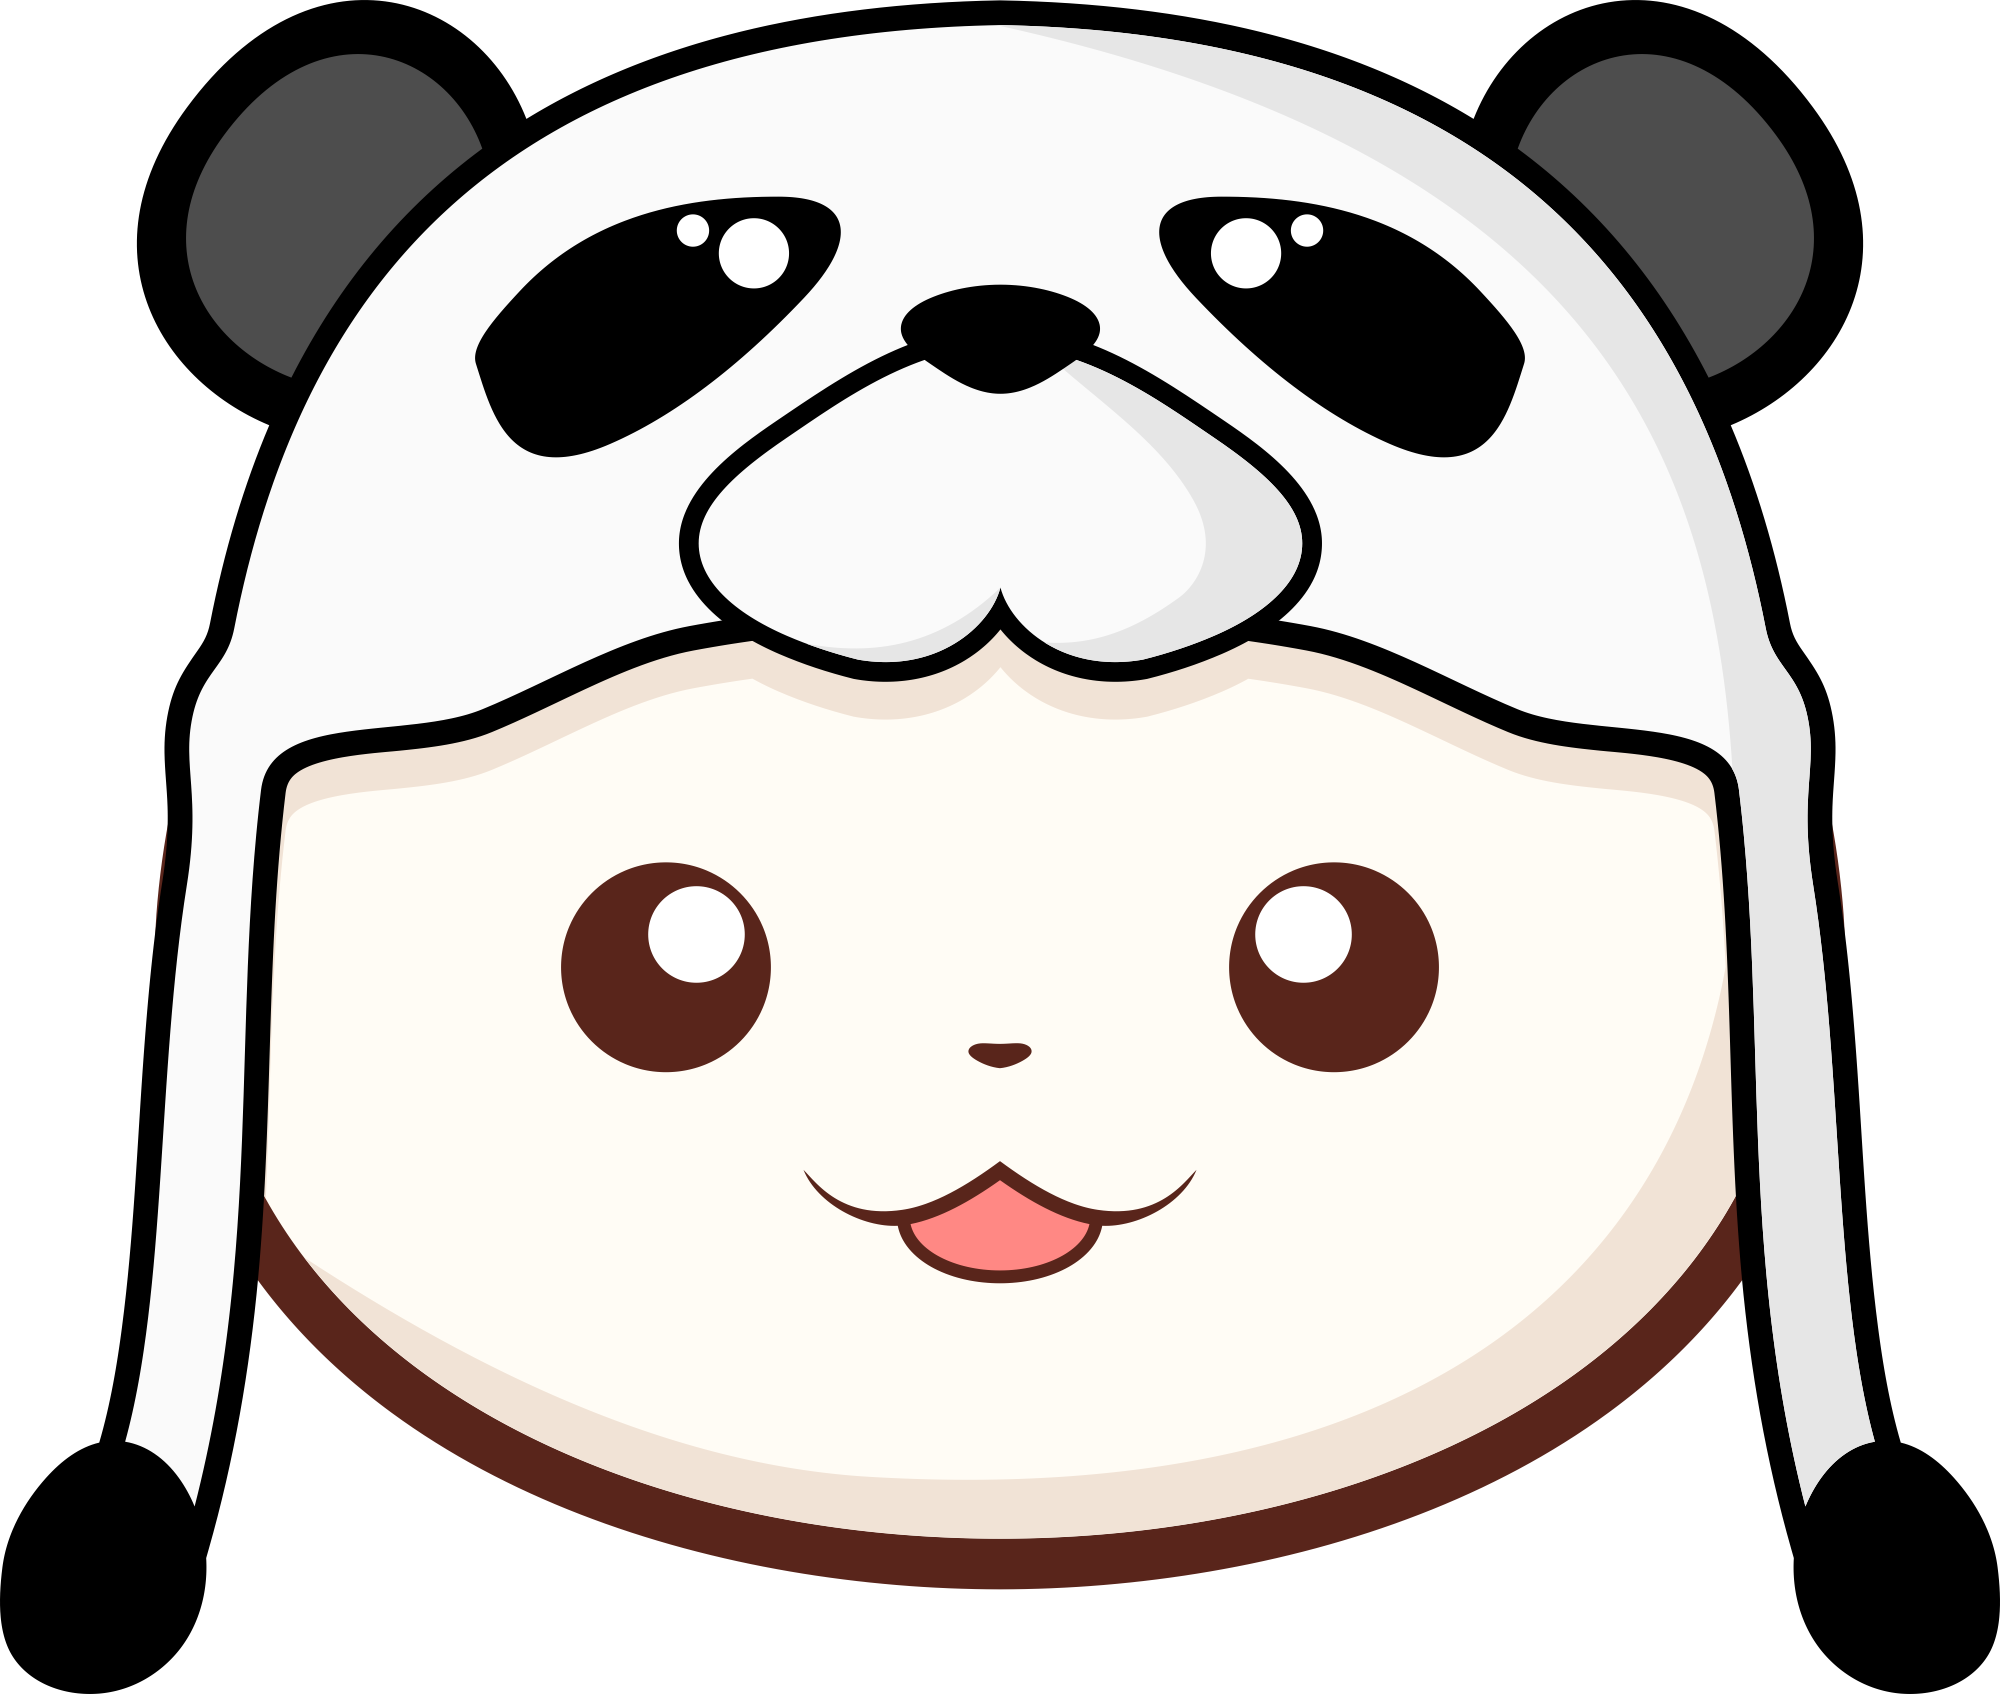 PandaSwap Volume